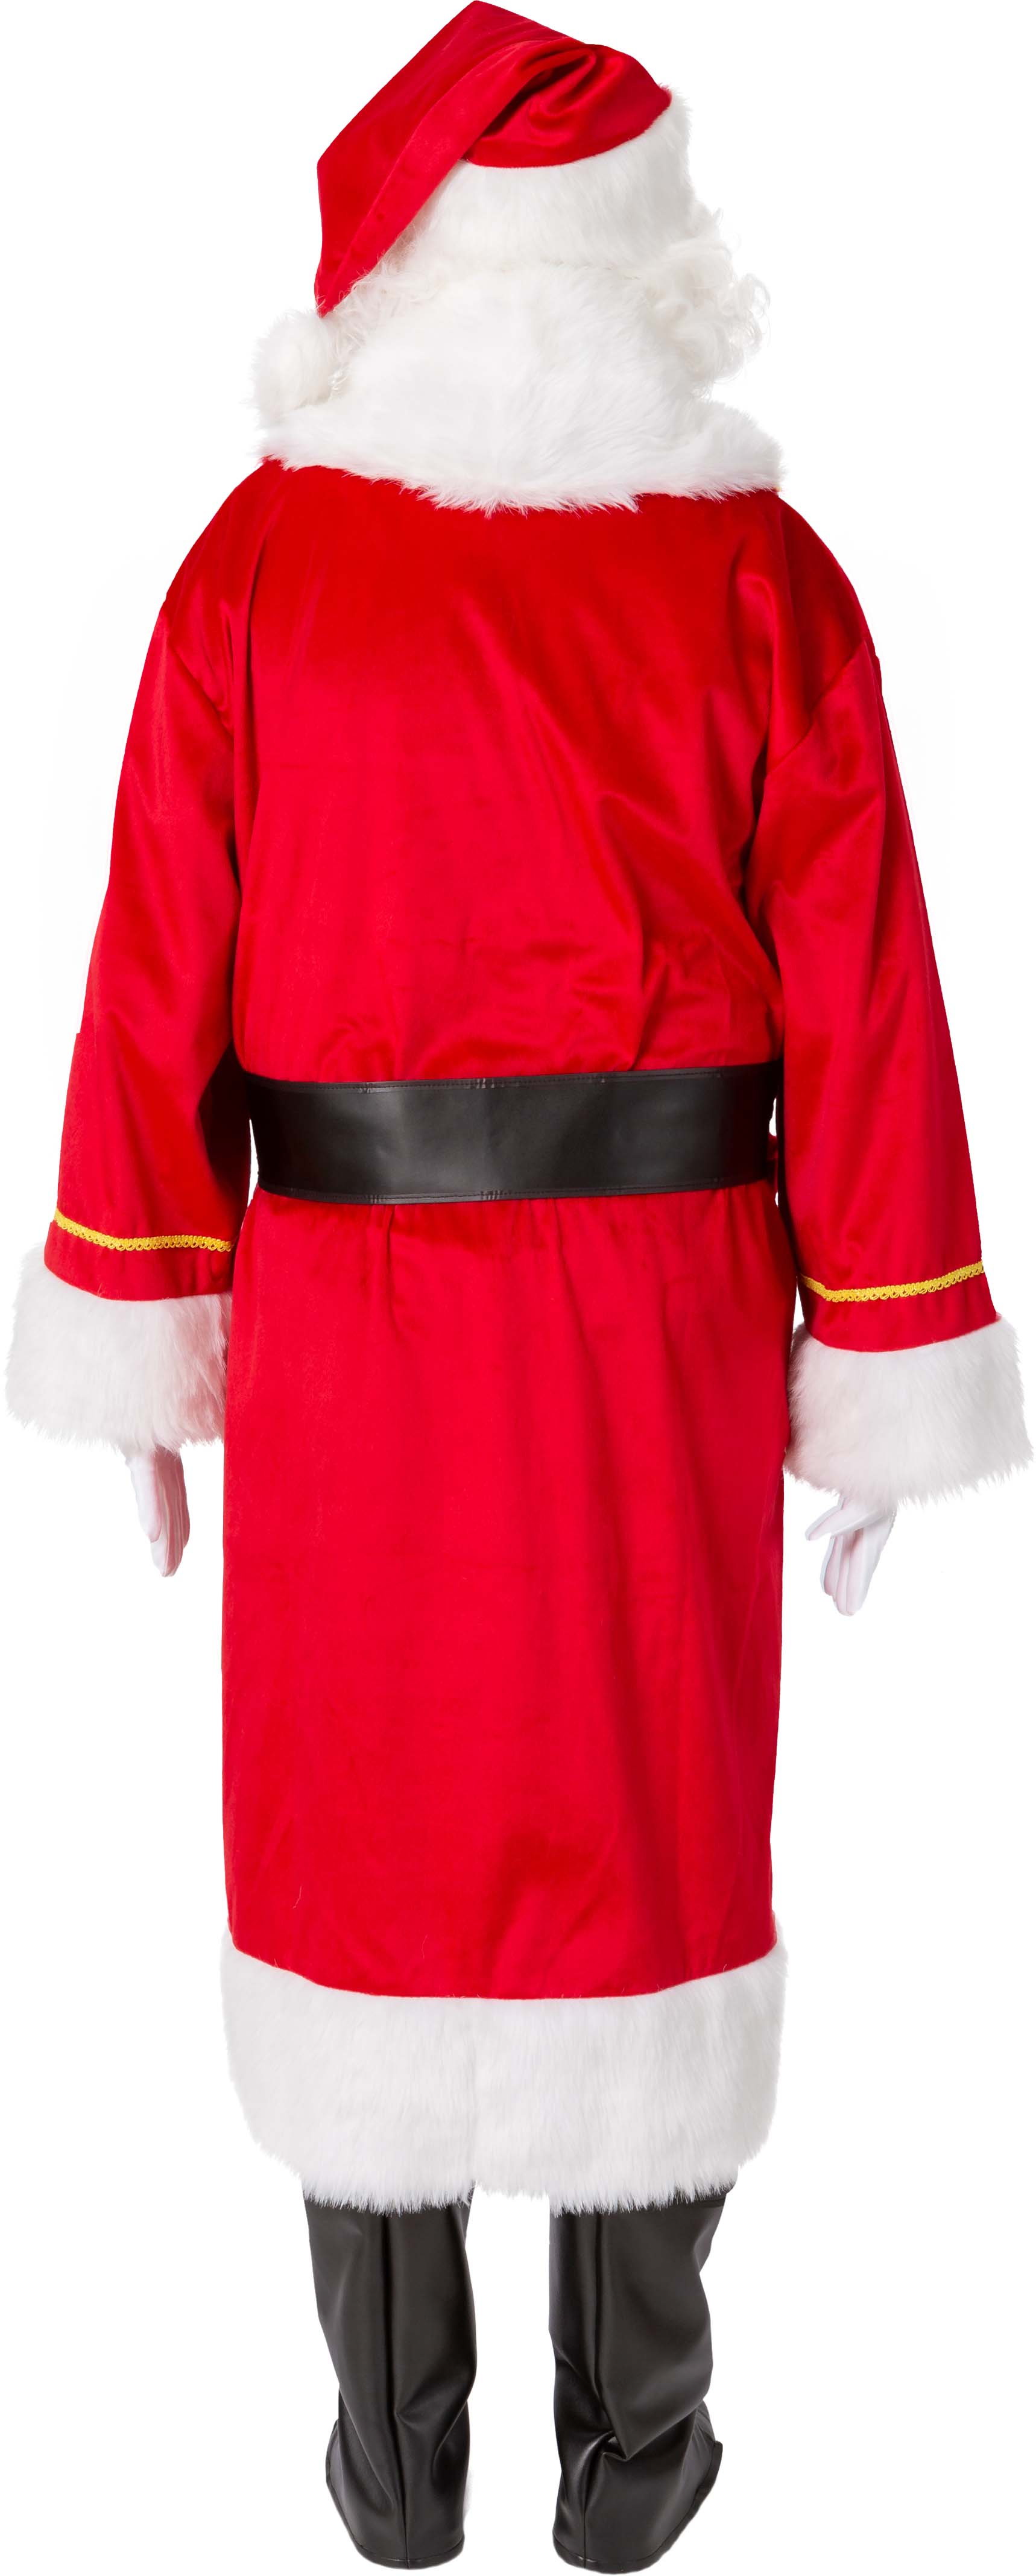 Santa Claus coat, red 